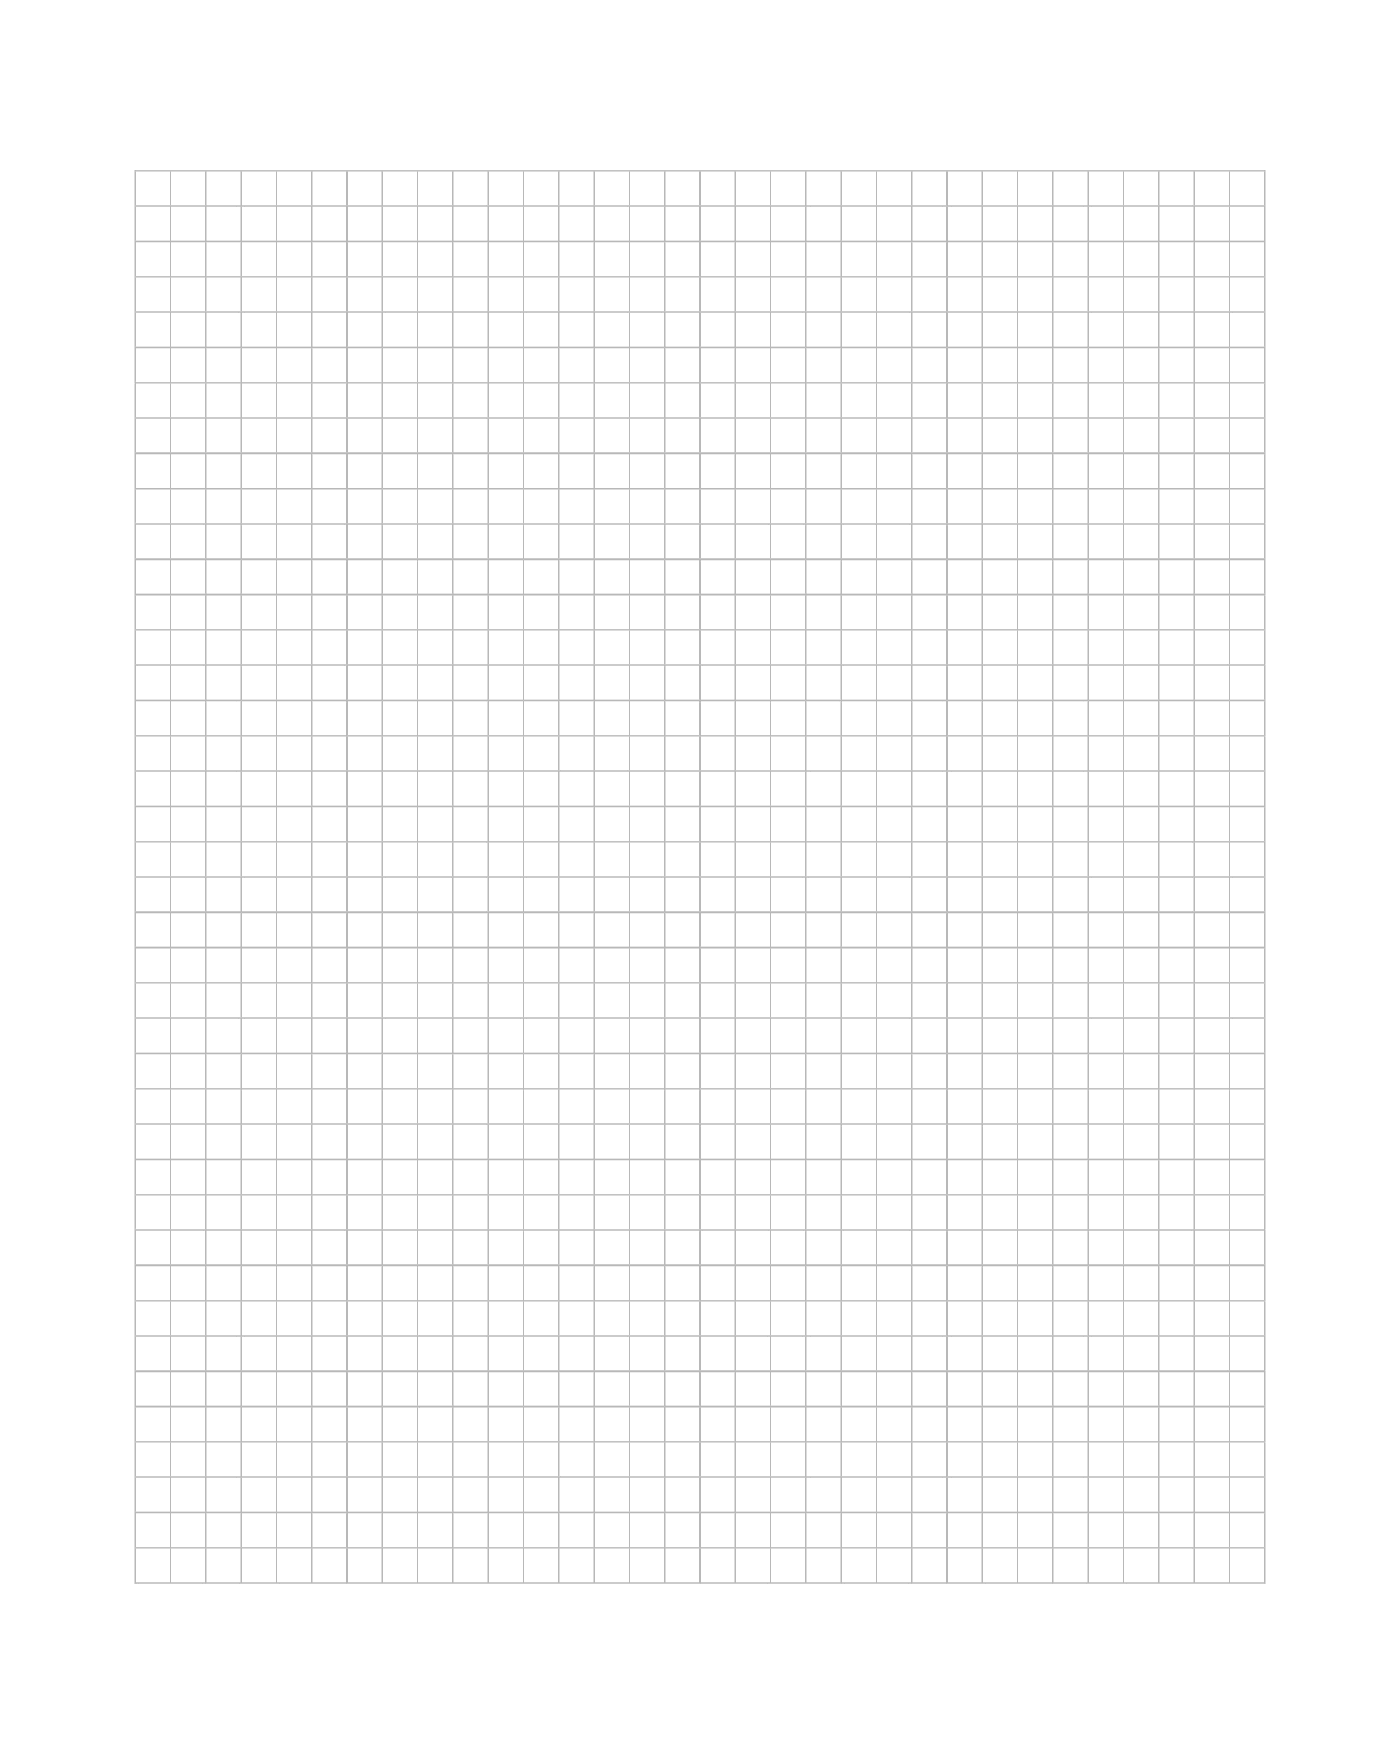  A large blank pixel grid 